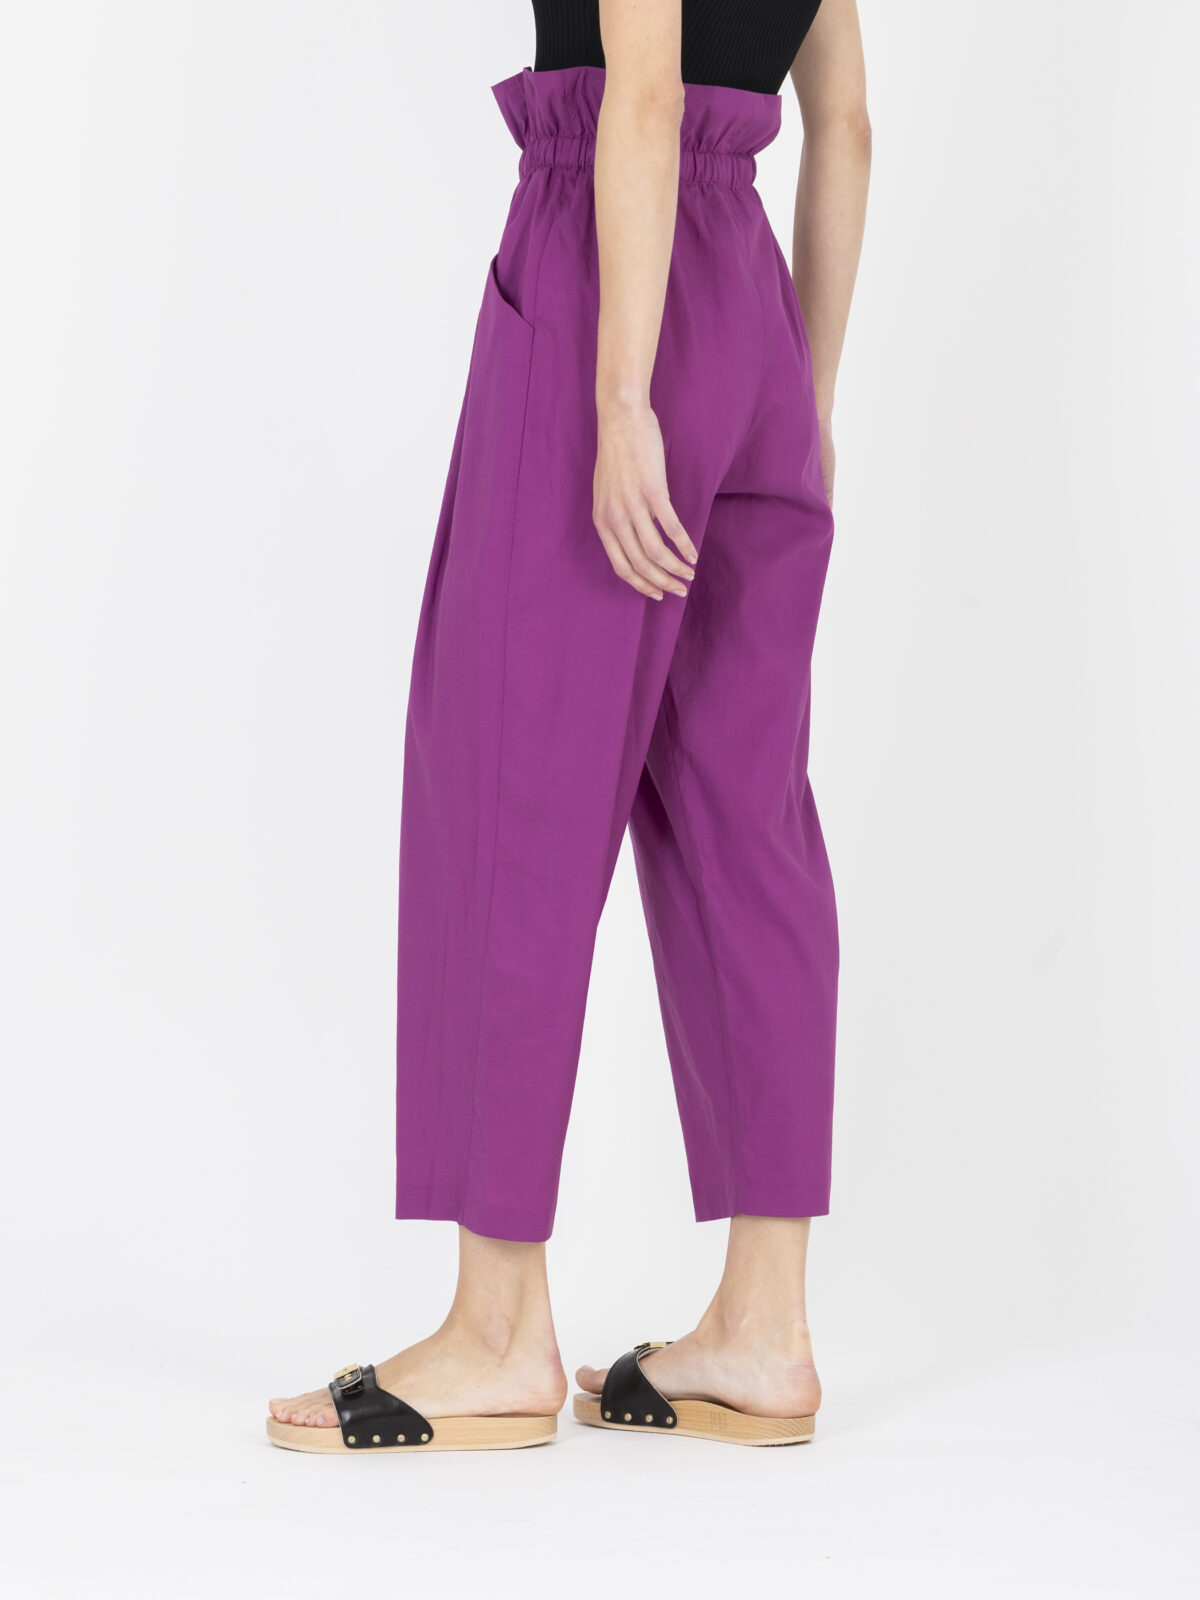 casimir-violet-pants-high-waist-paper-bag-vanessa-bruno-matchboxathens